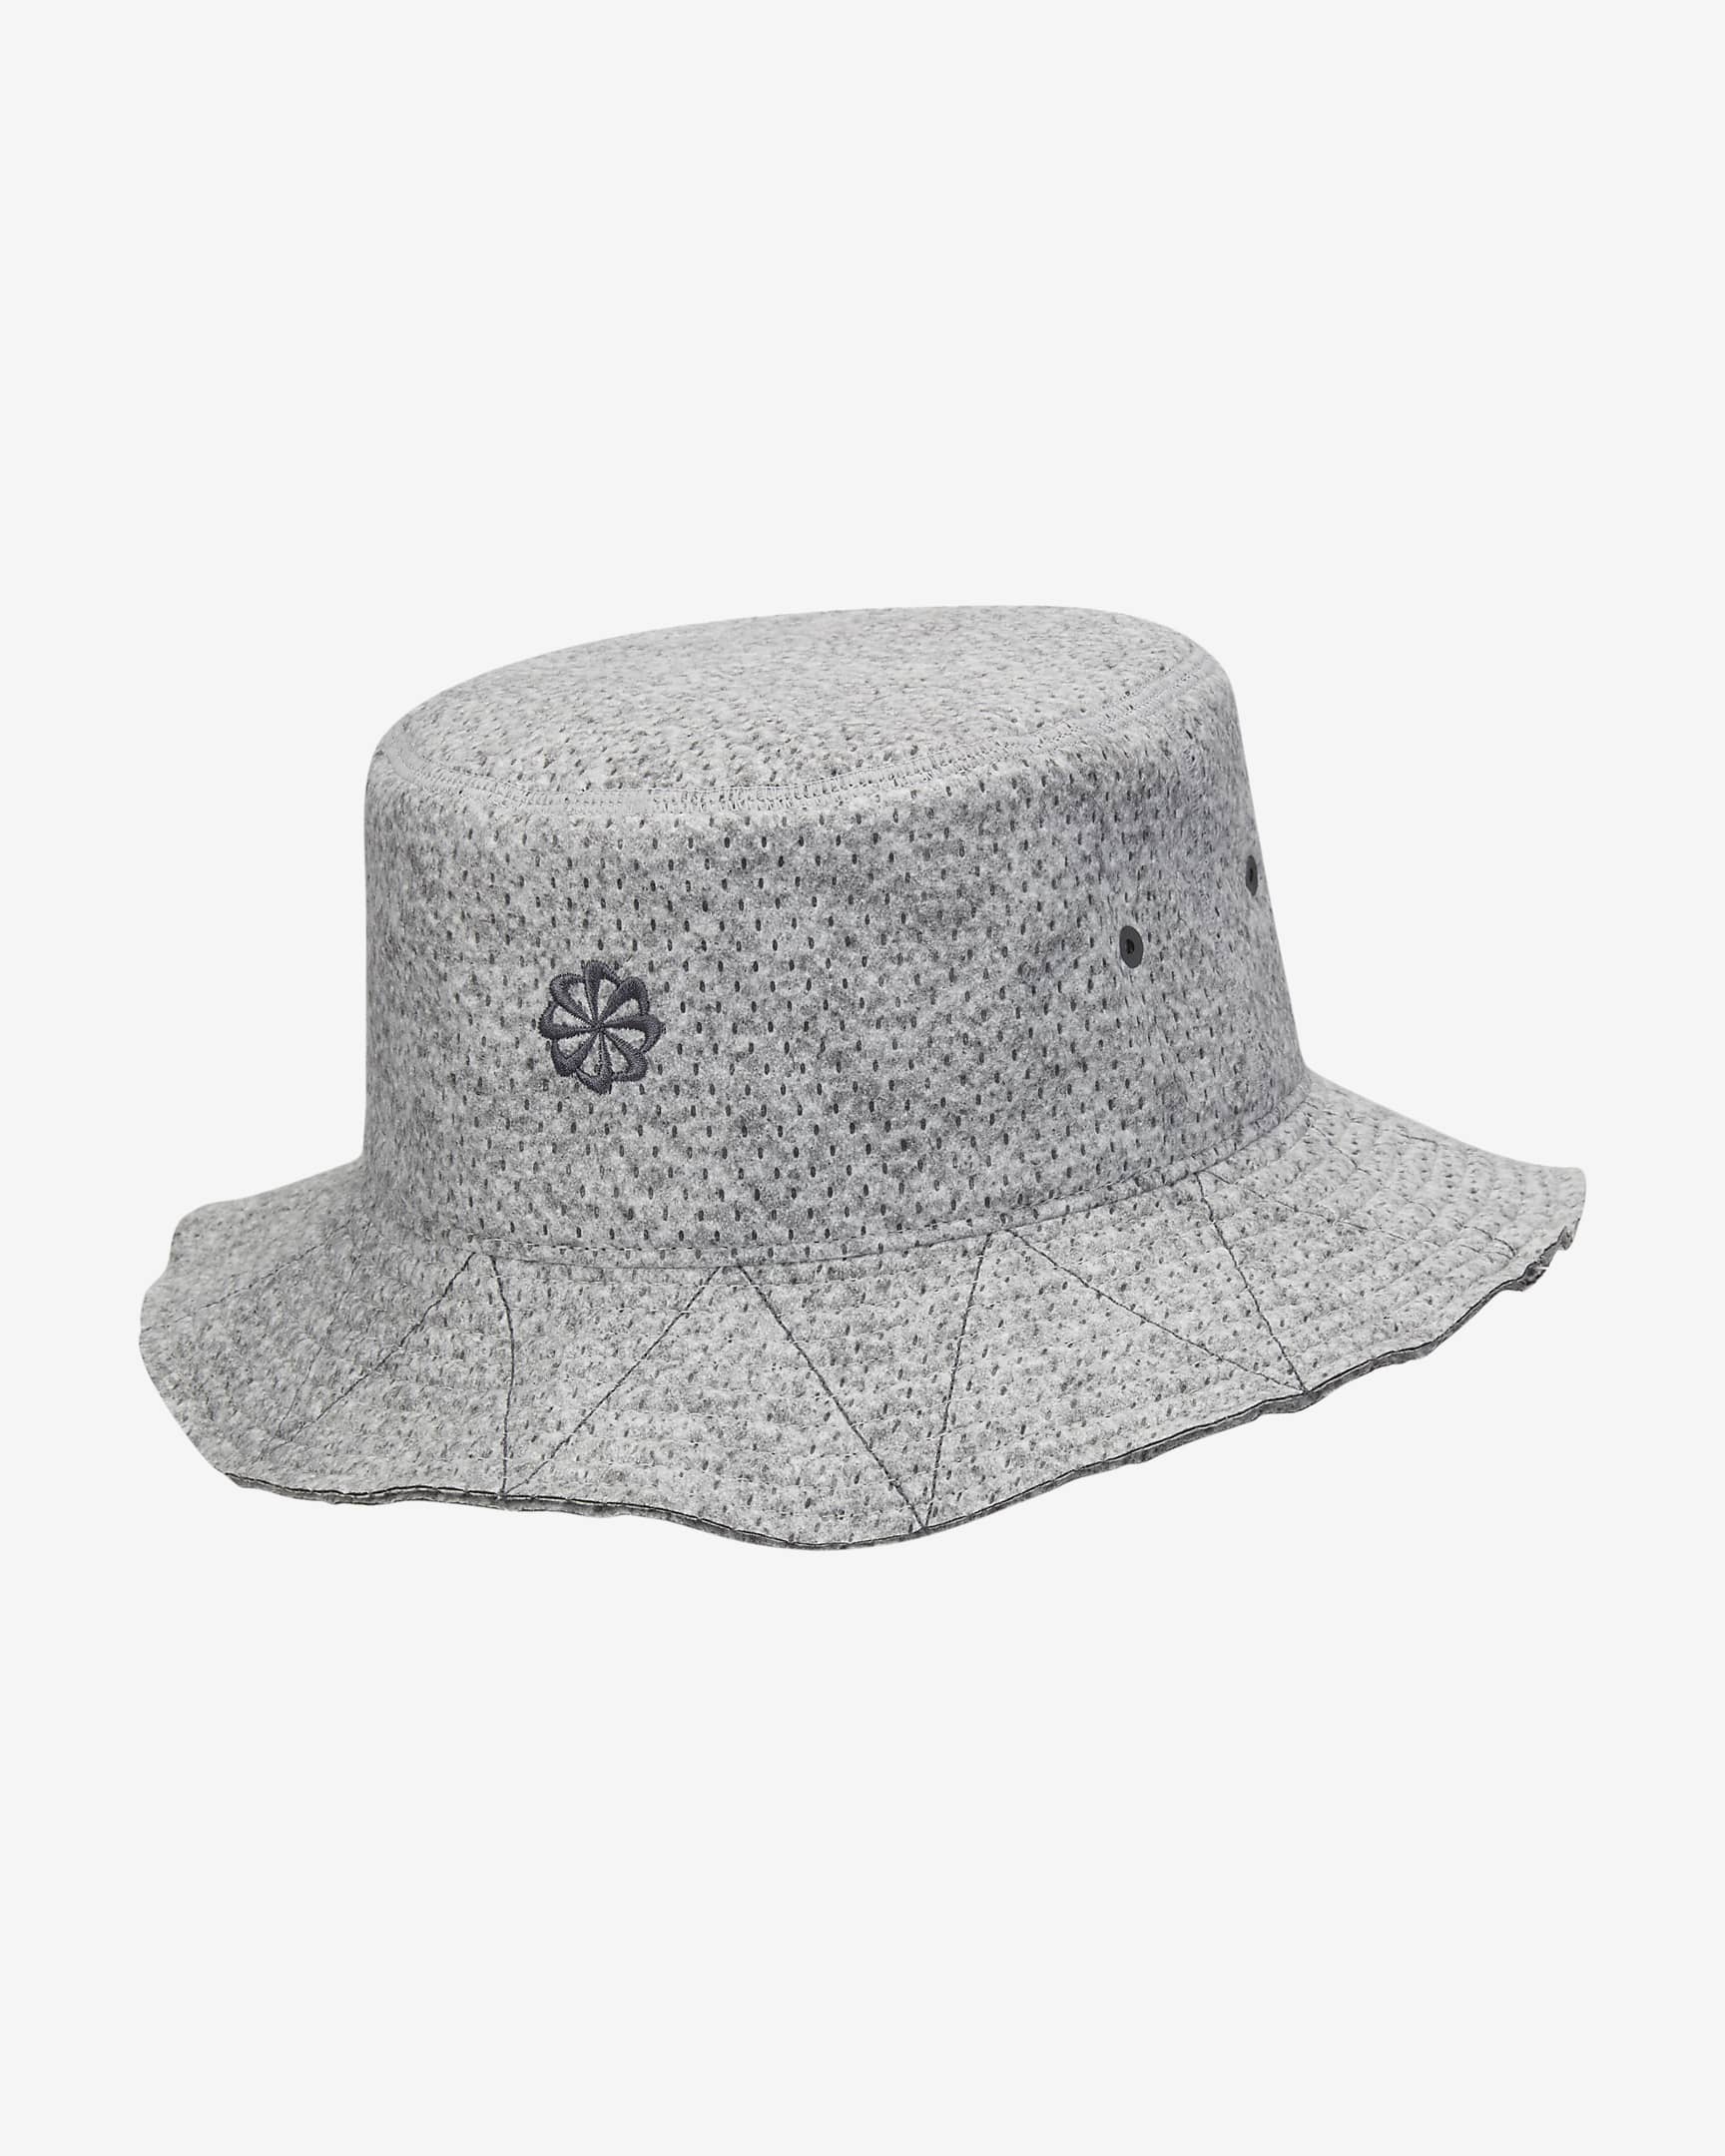 Nike Forward Bucket Hat Apex Bucket Hat - Smoke Grey/Cool Grey